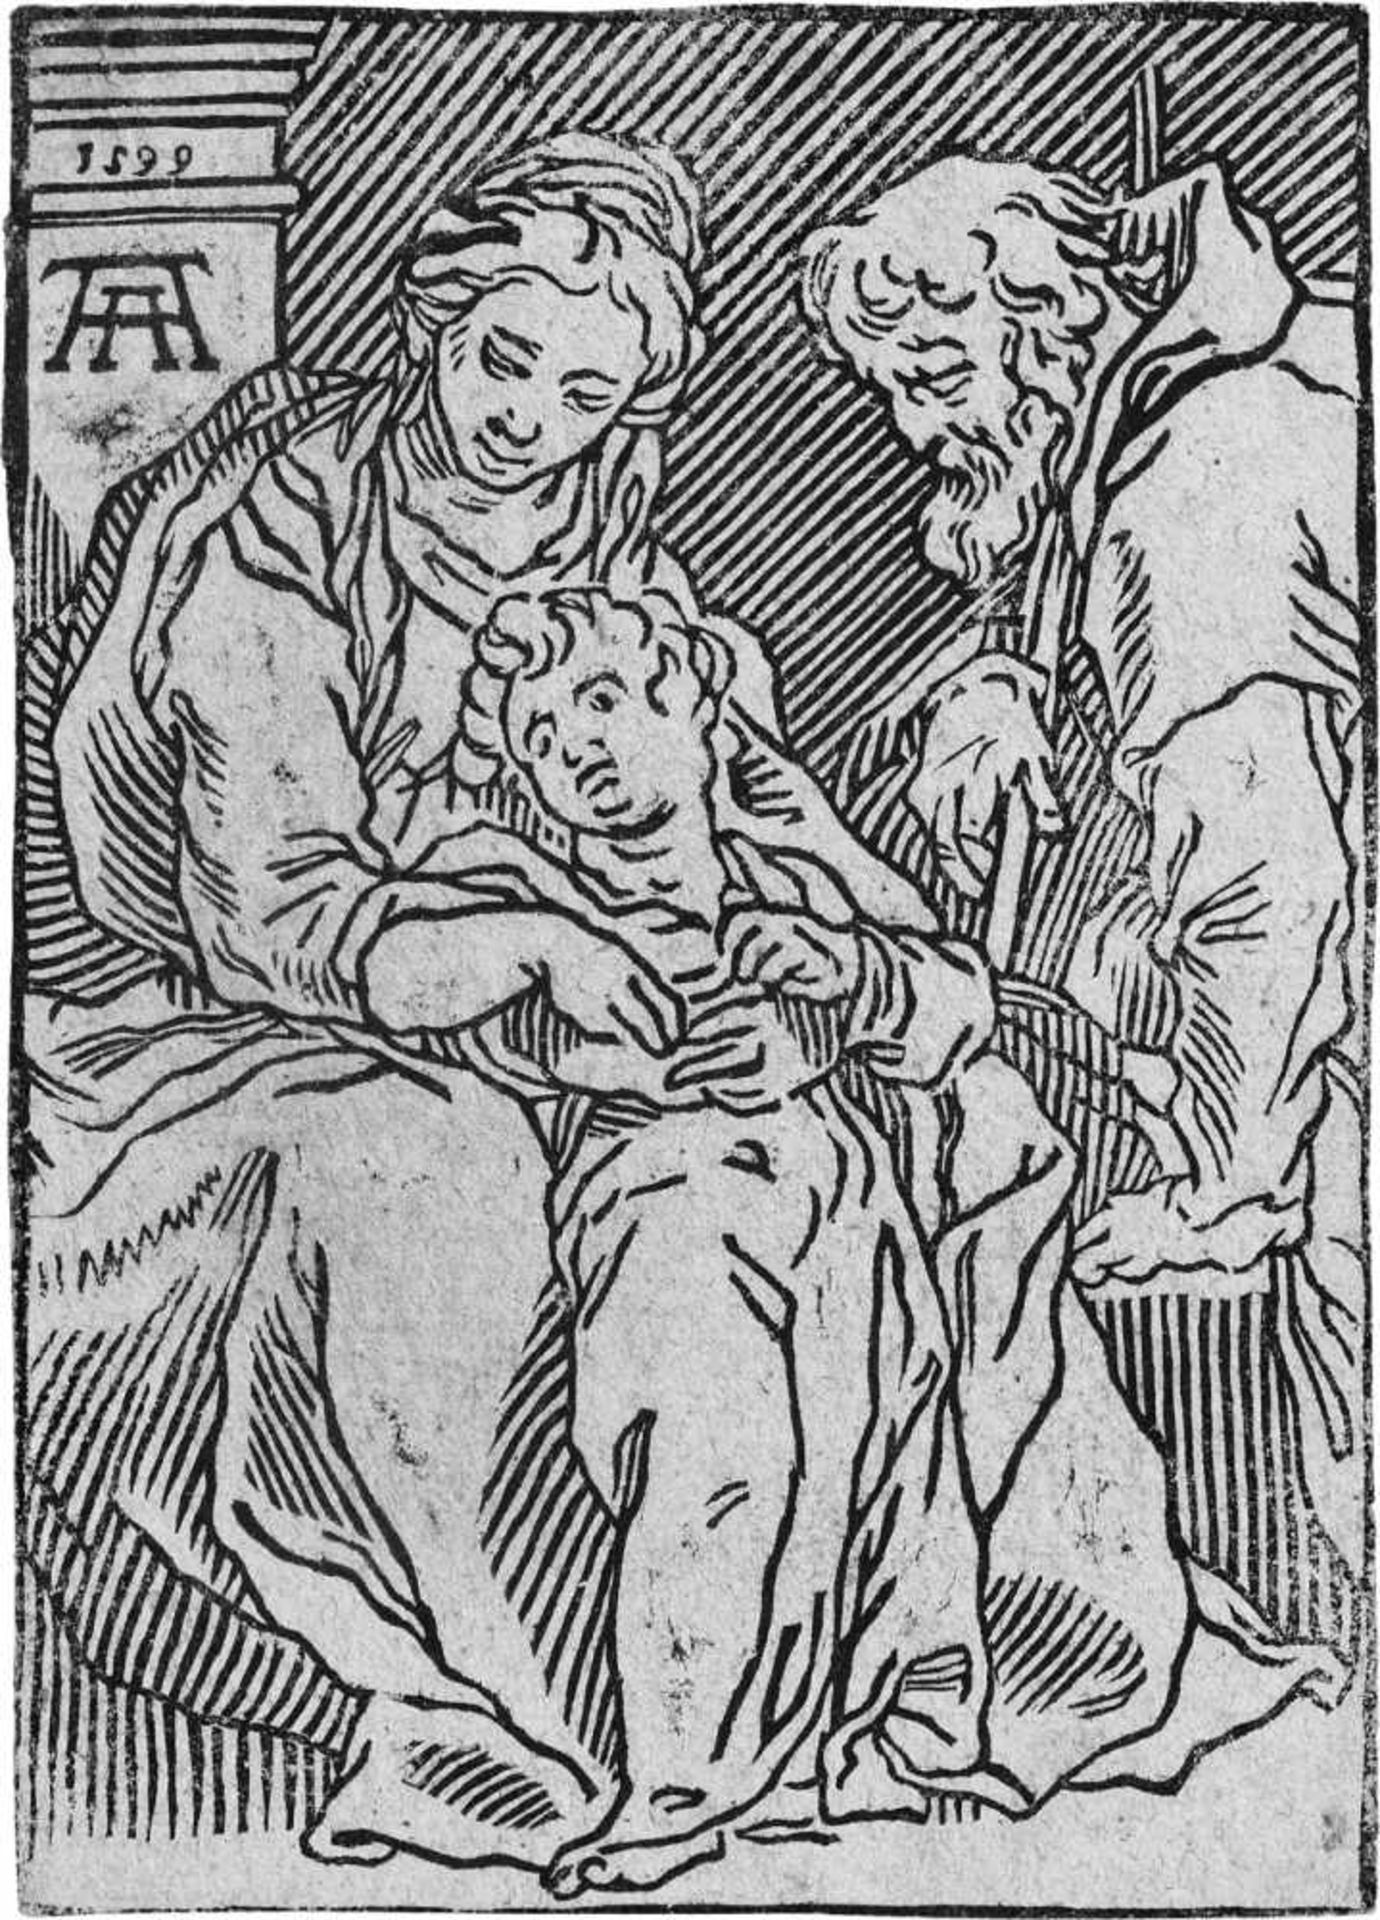 Andreani, Andrea: Die Heilige FamilieDie Heilige Familie. Holzschnitt. 19,3 x 13,6 cm. 1599. Nicht